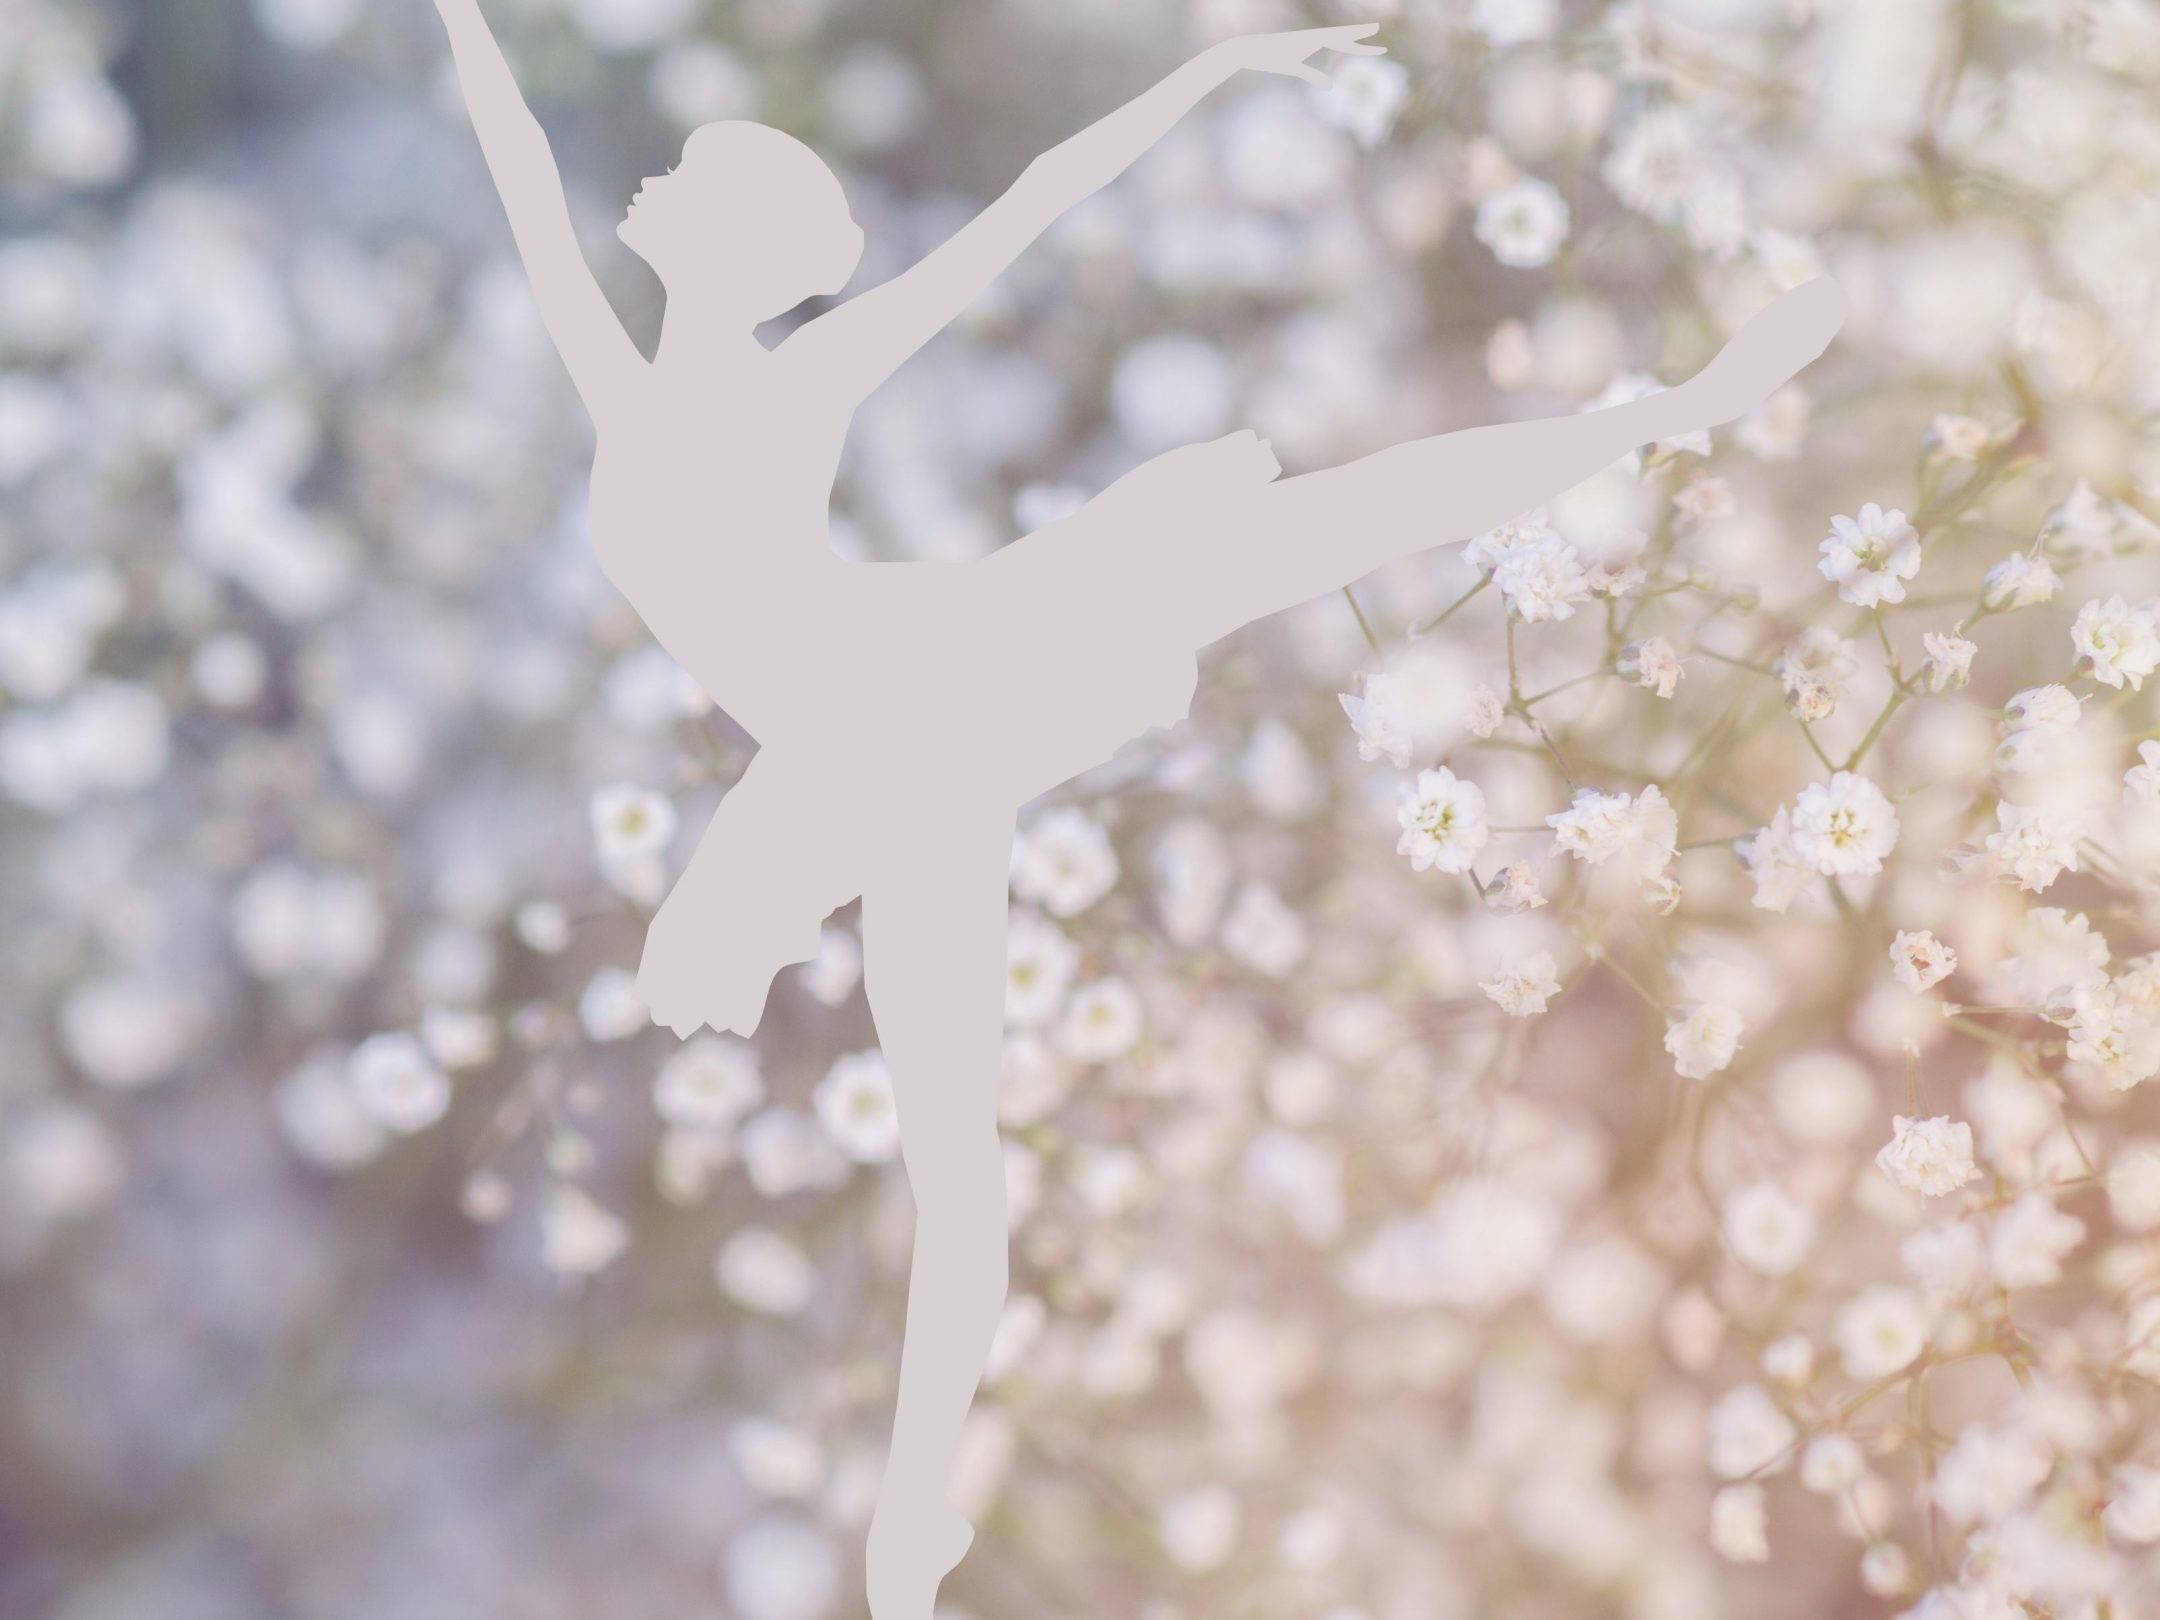 2160x1620 iPad wallpaper 4k Ballerina Girl Dance White Dandelion Flowers iPad Wallpaper 2160x1620 pixels resolution